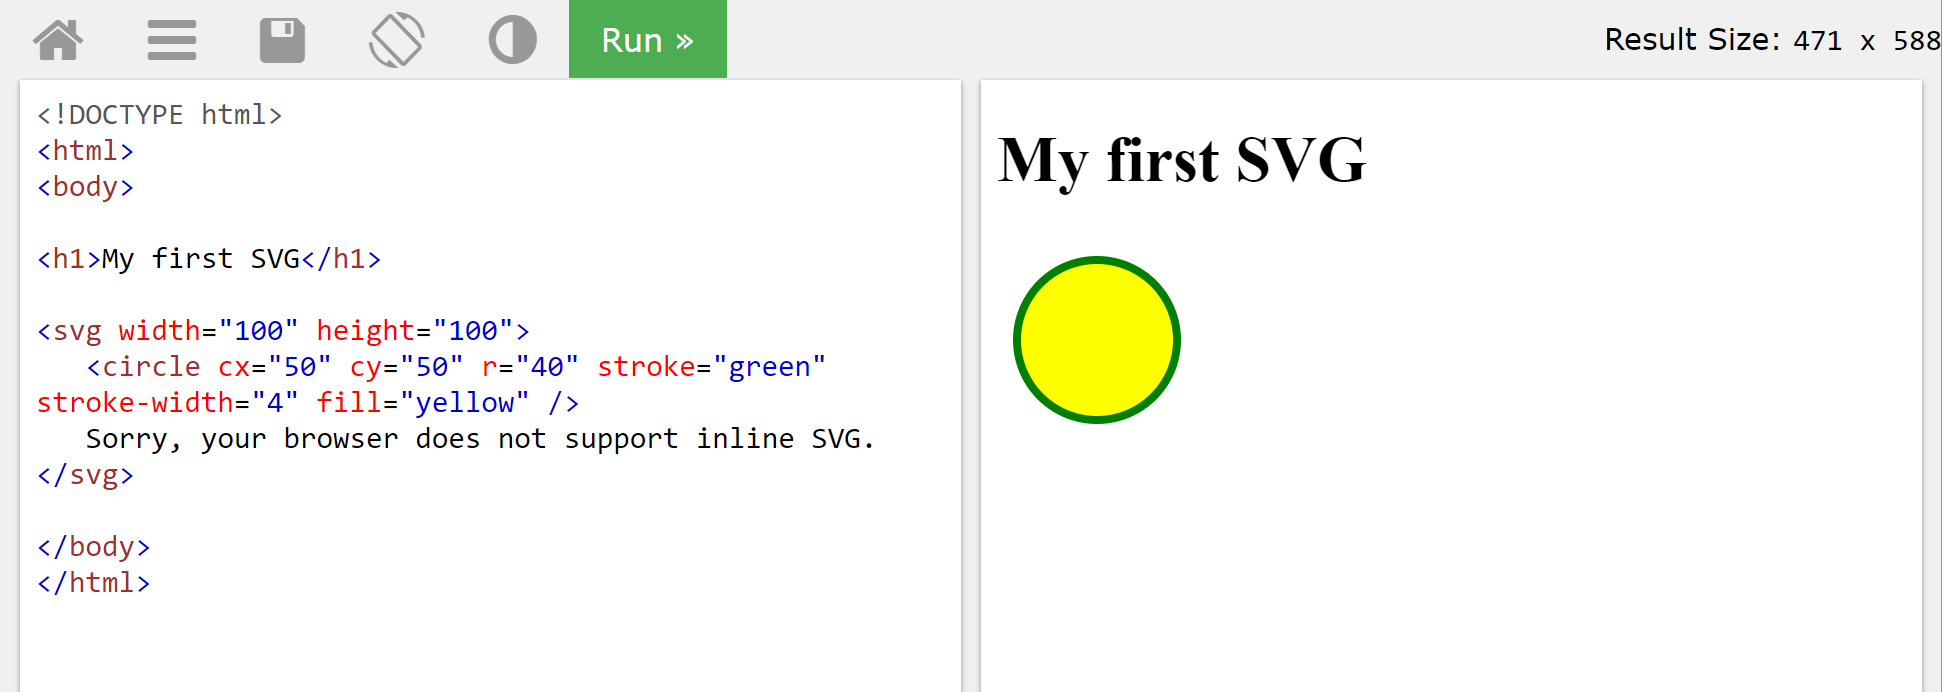 Download SVG in Power BI - Part 1 - Hat Full of Data